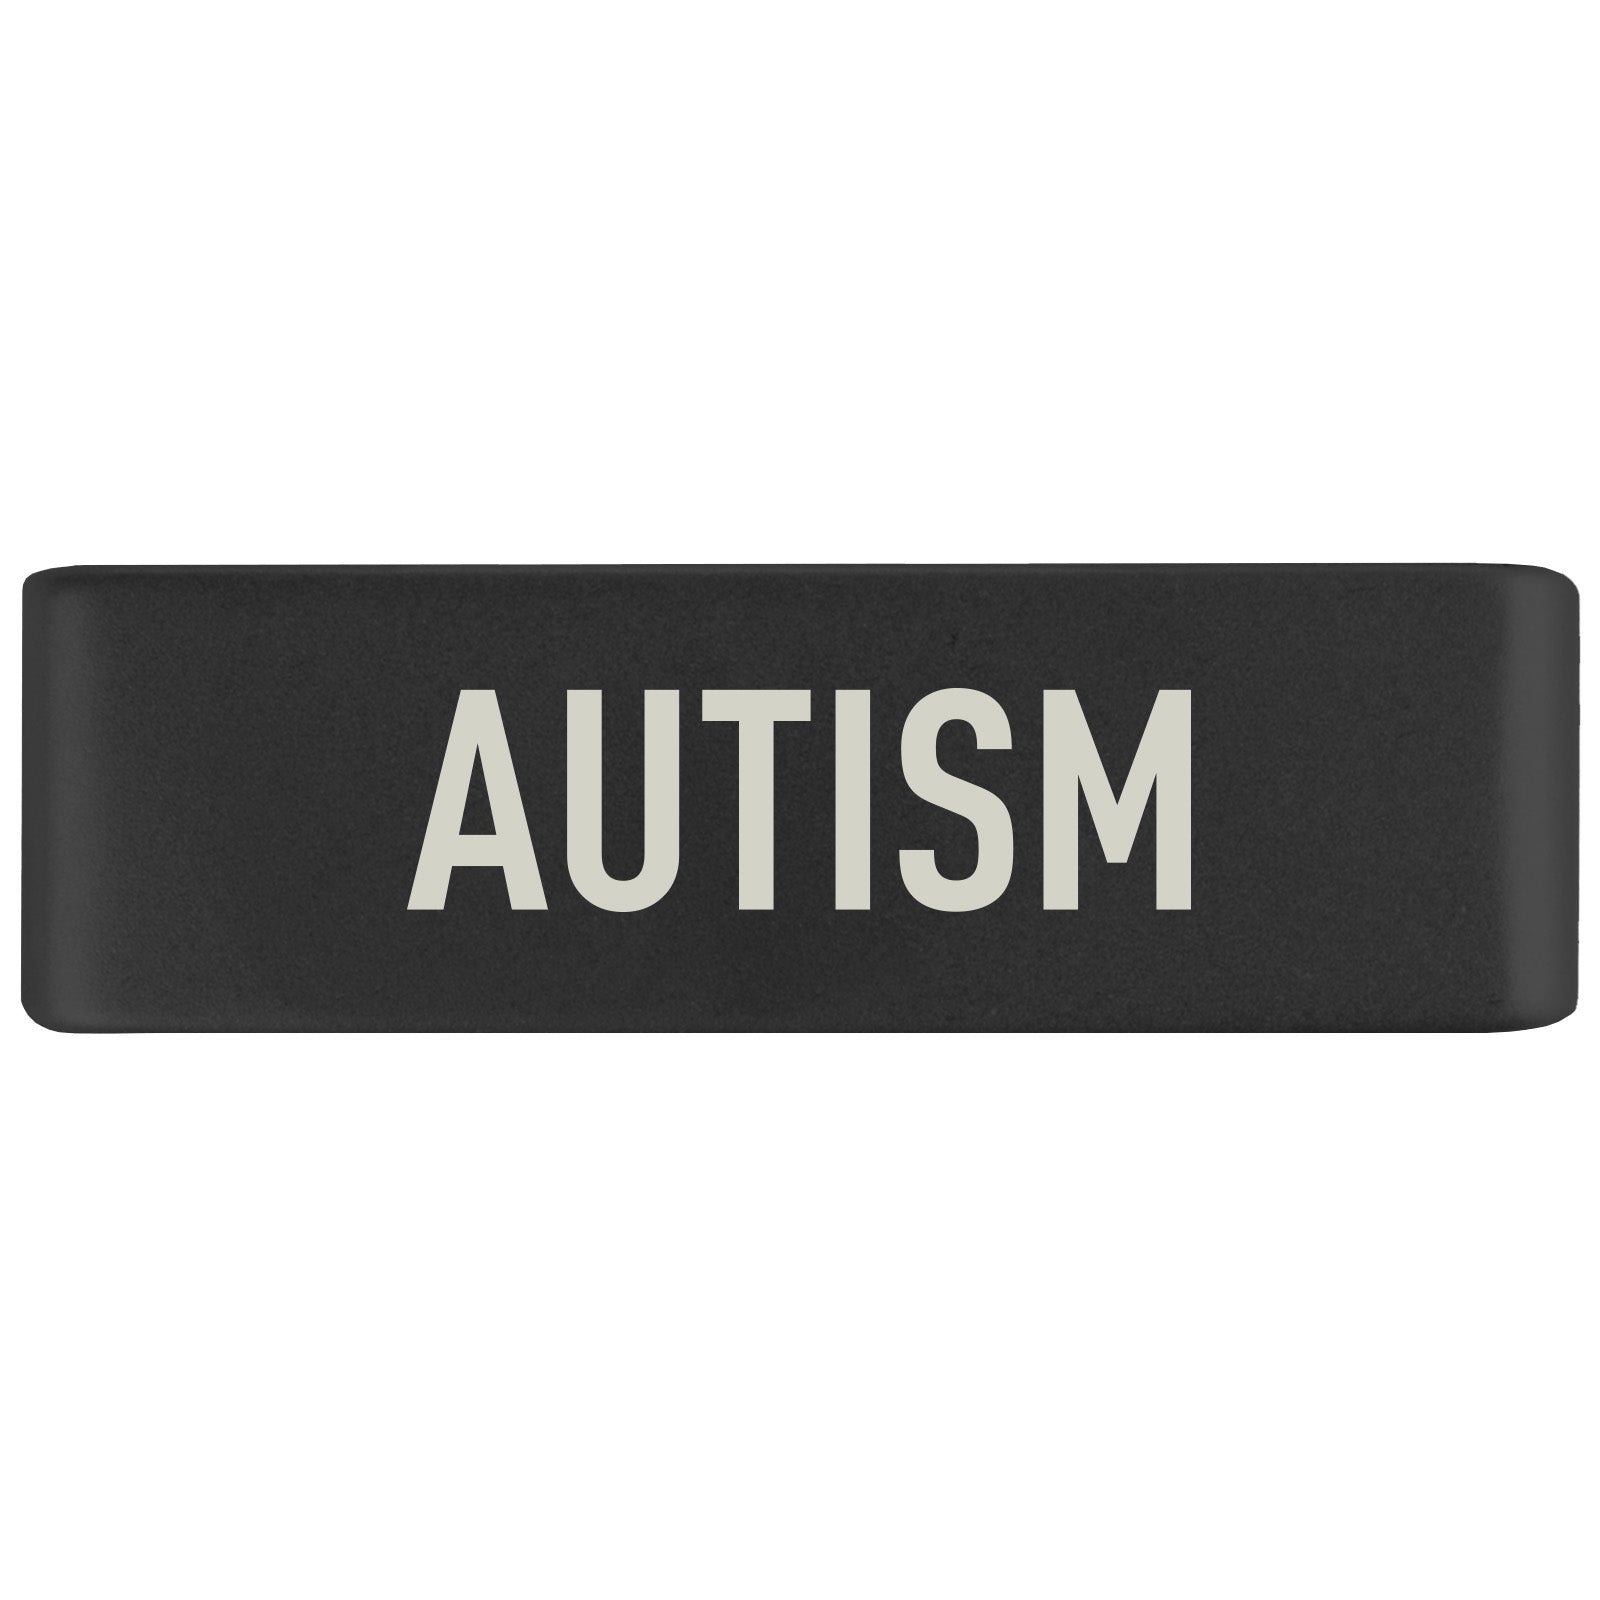 Autism Badge Badge 19mm - ROAD iD